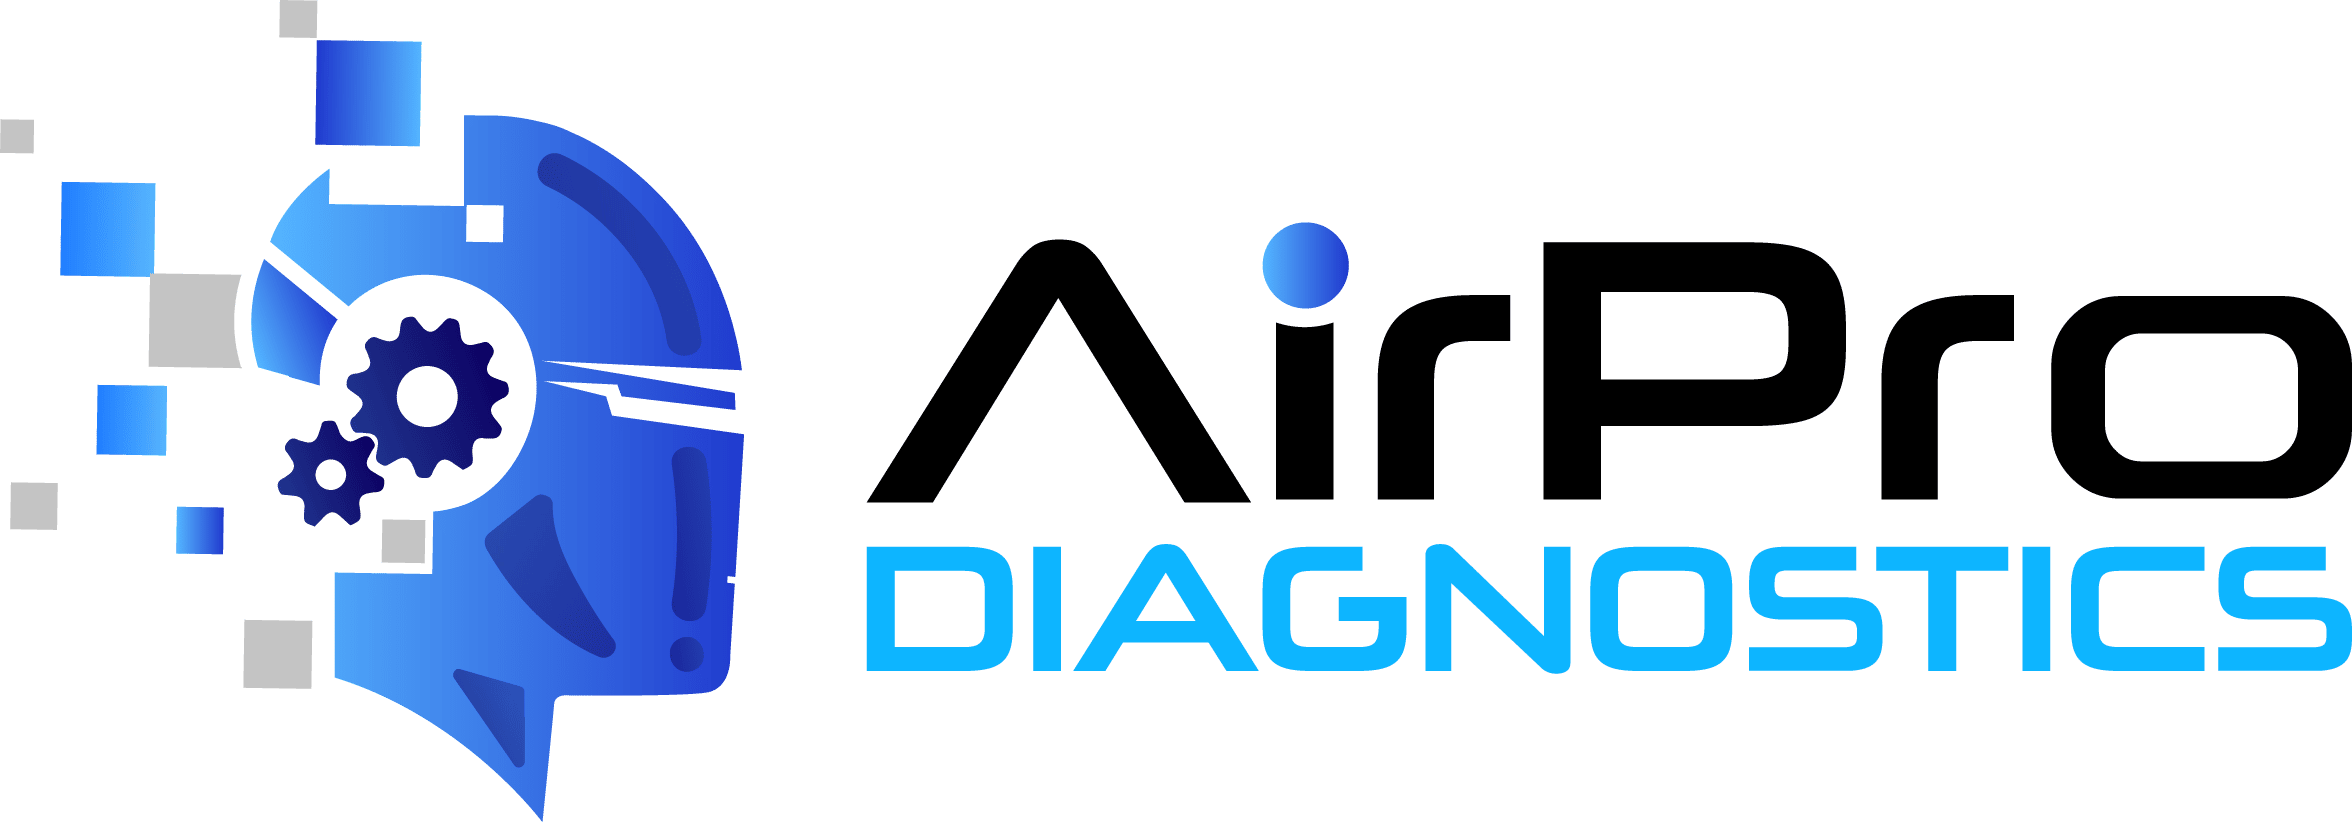 AirPro Diagnostics | Remote Diagnostics & ADAS Scanning | March 2021 | AirPro Diagnostics | Remote Diagnostics & ADAS Scanning